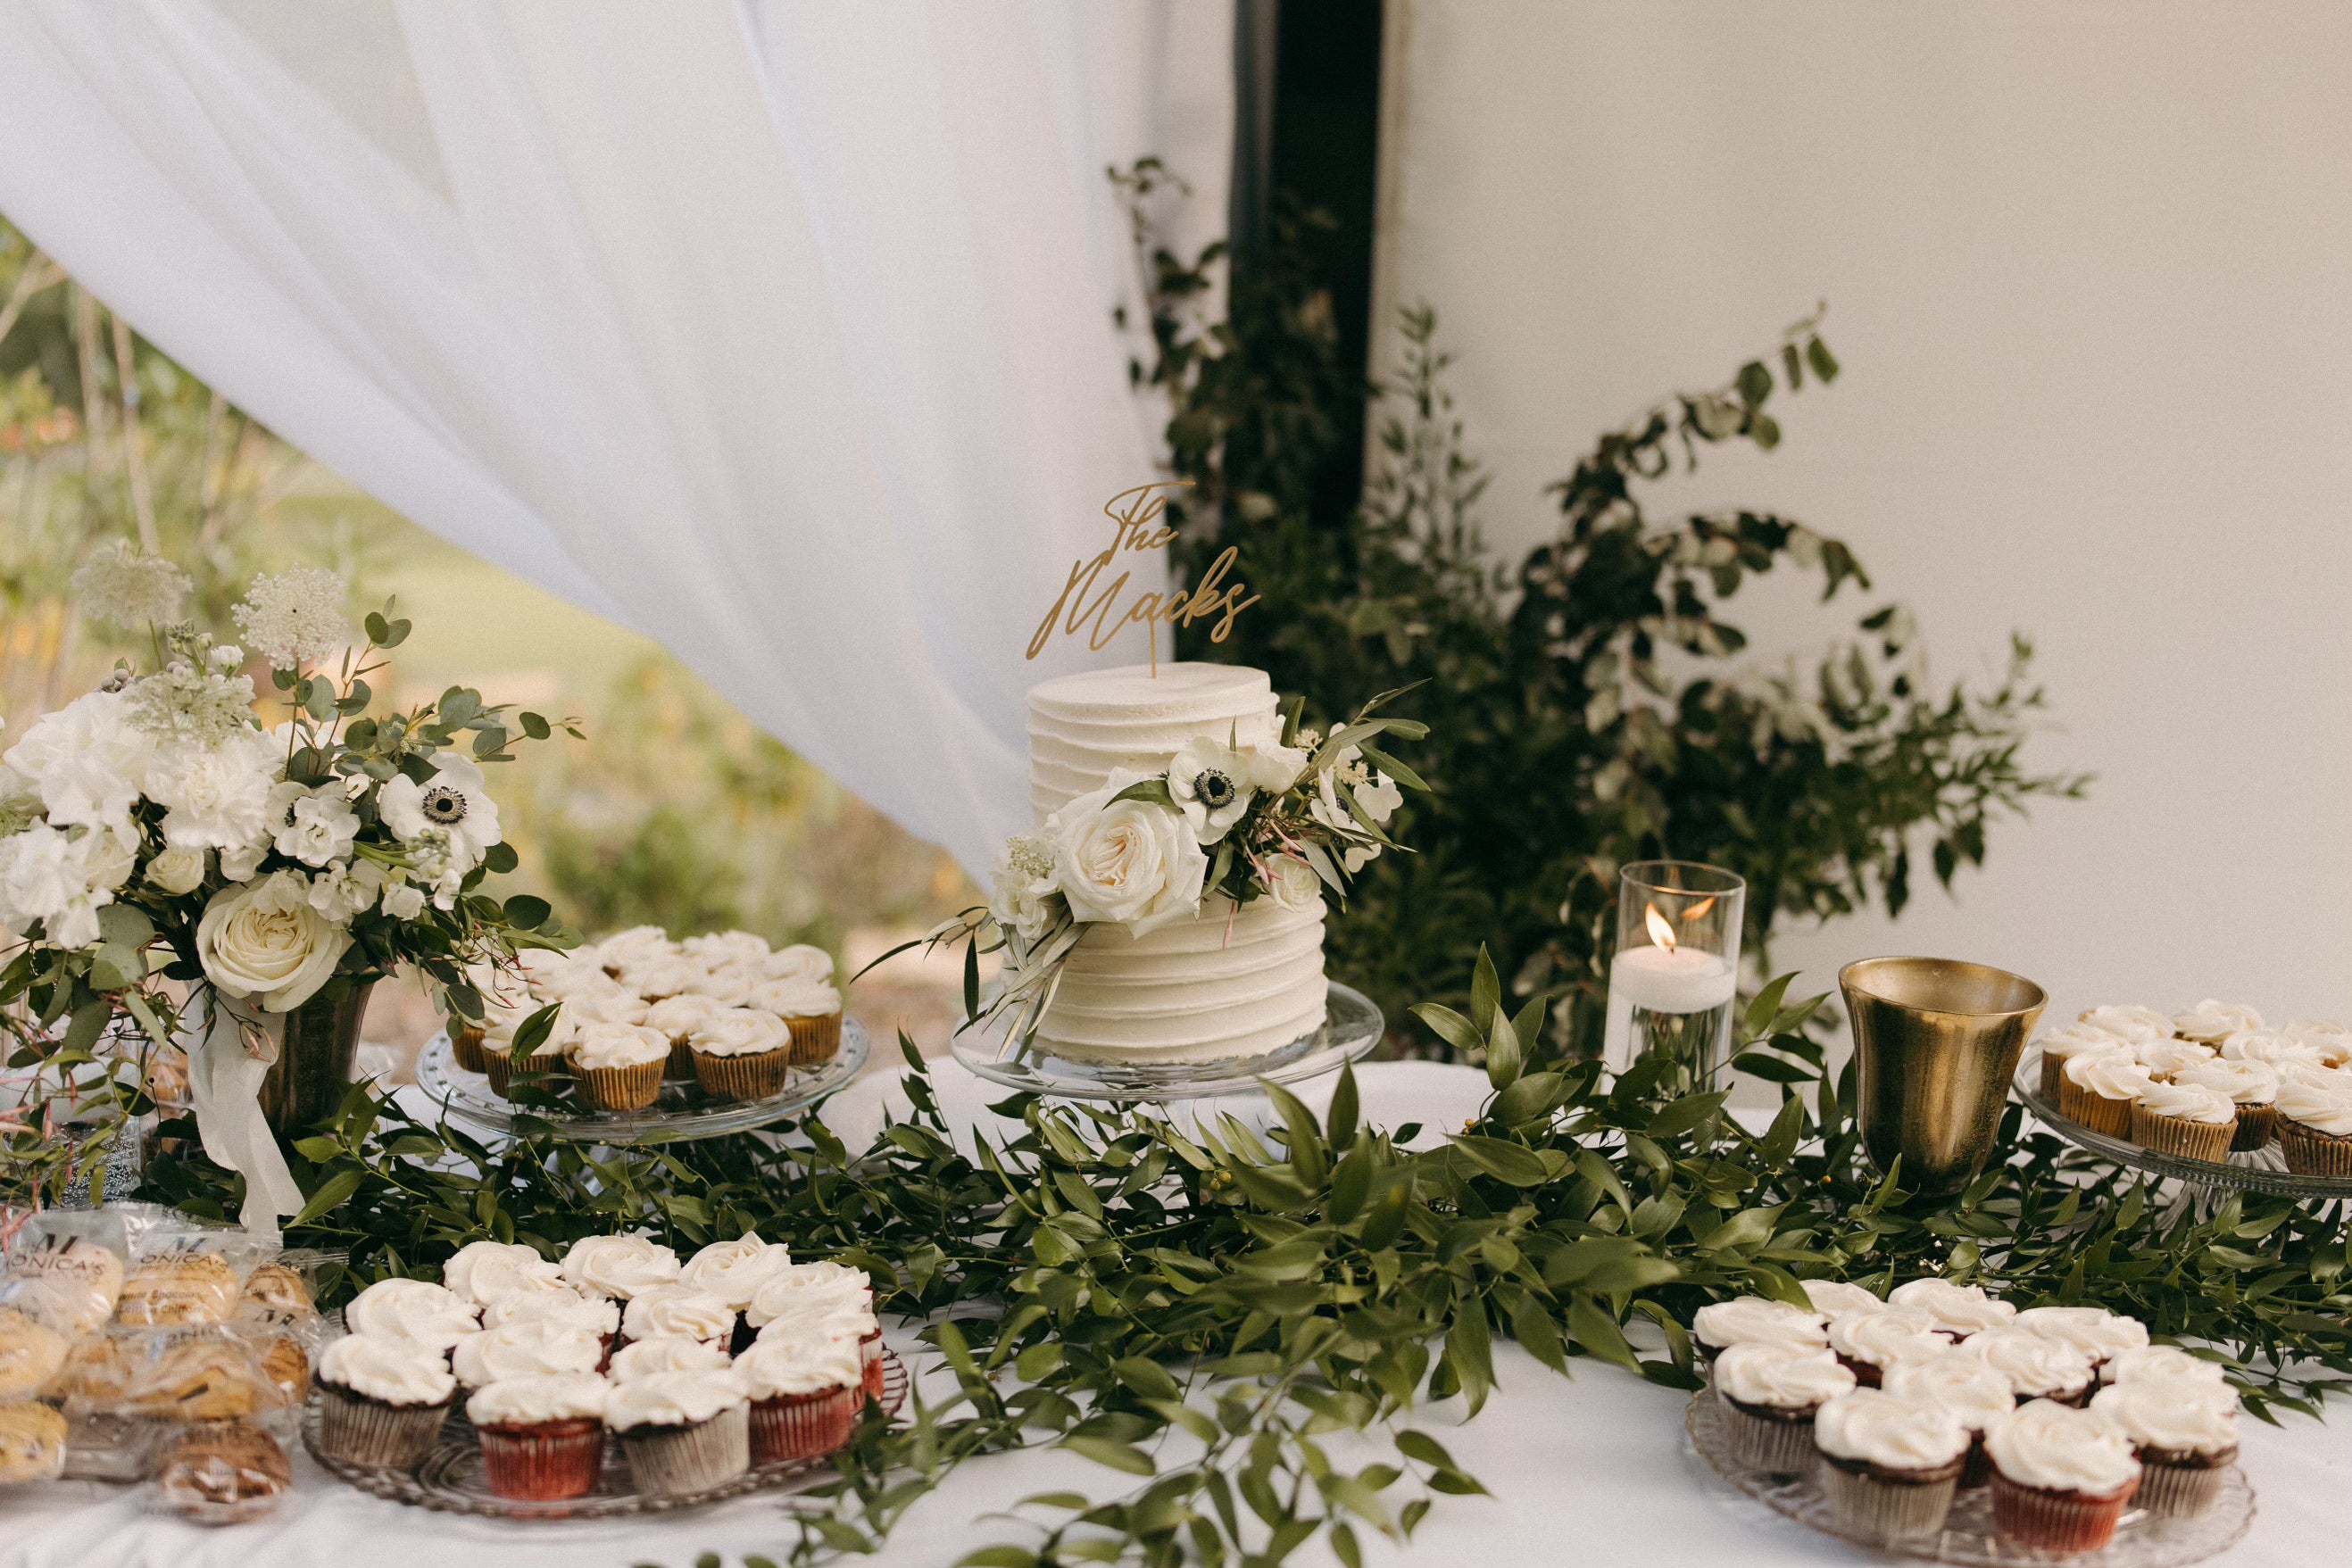 Wedding display of cookies and cupcakes.